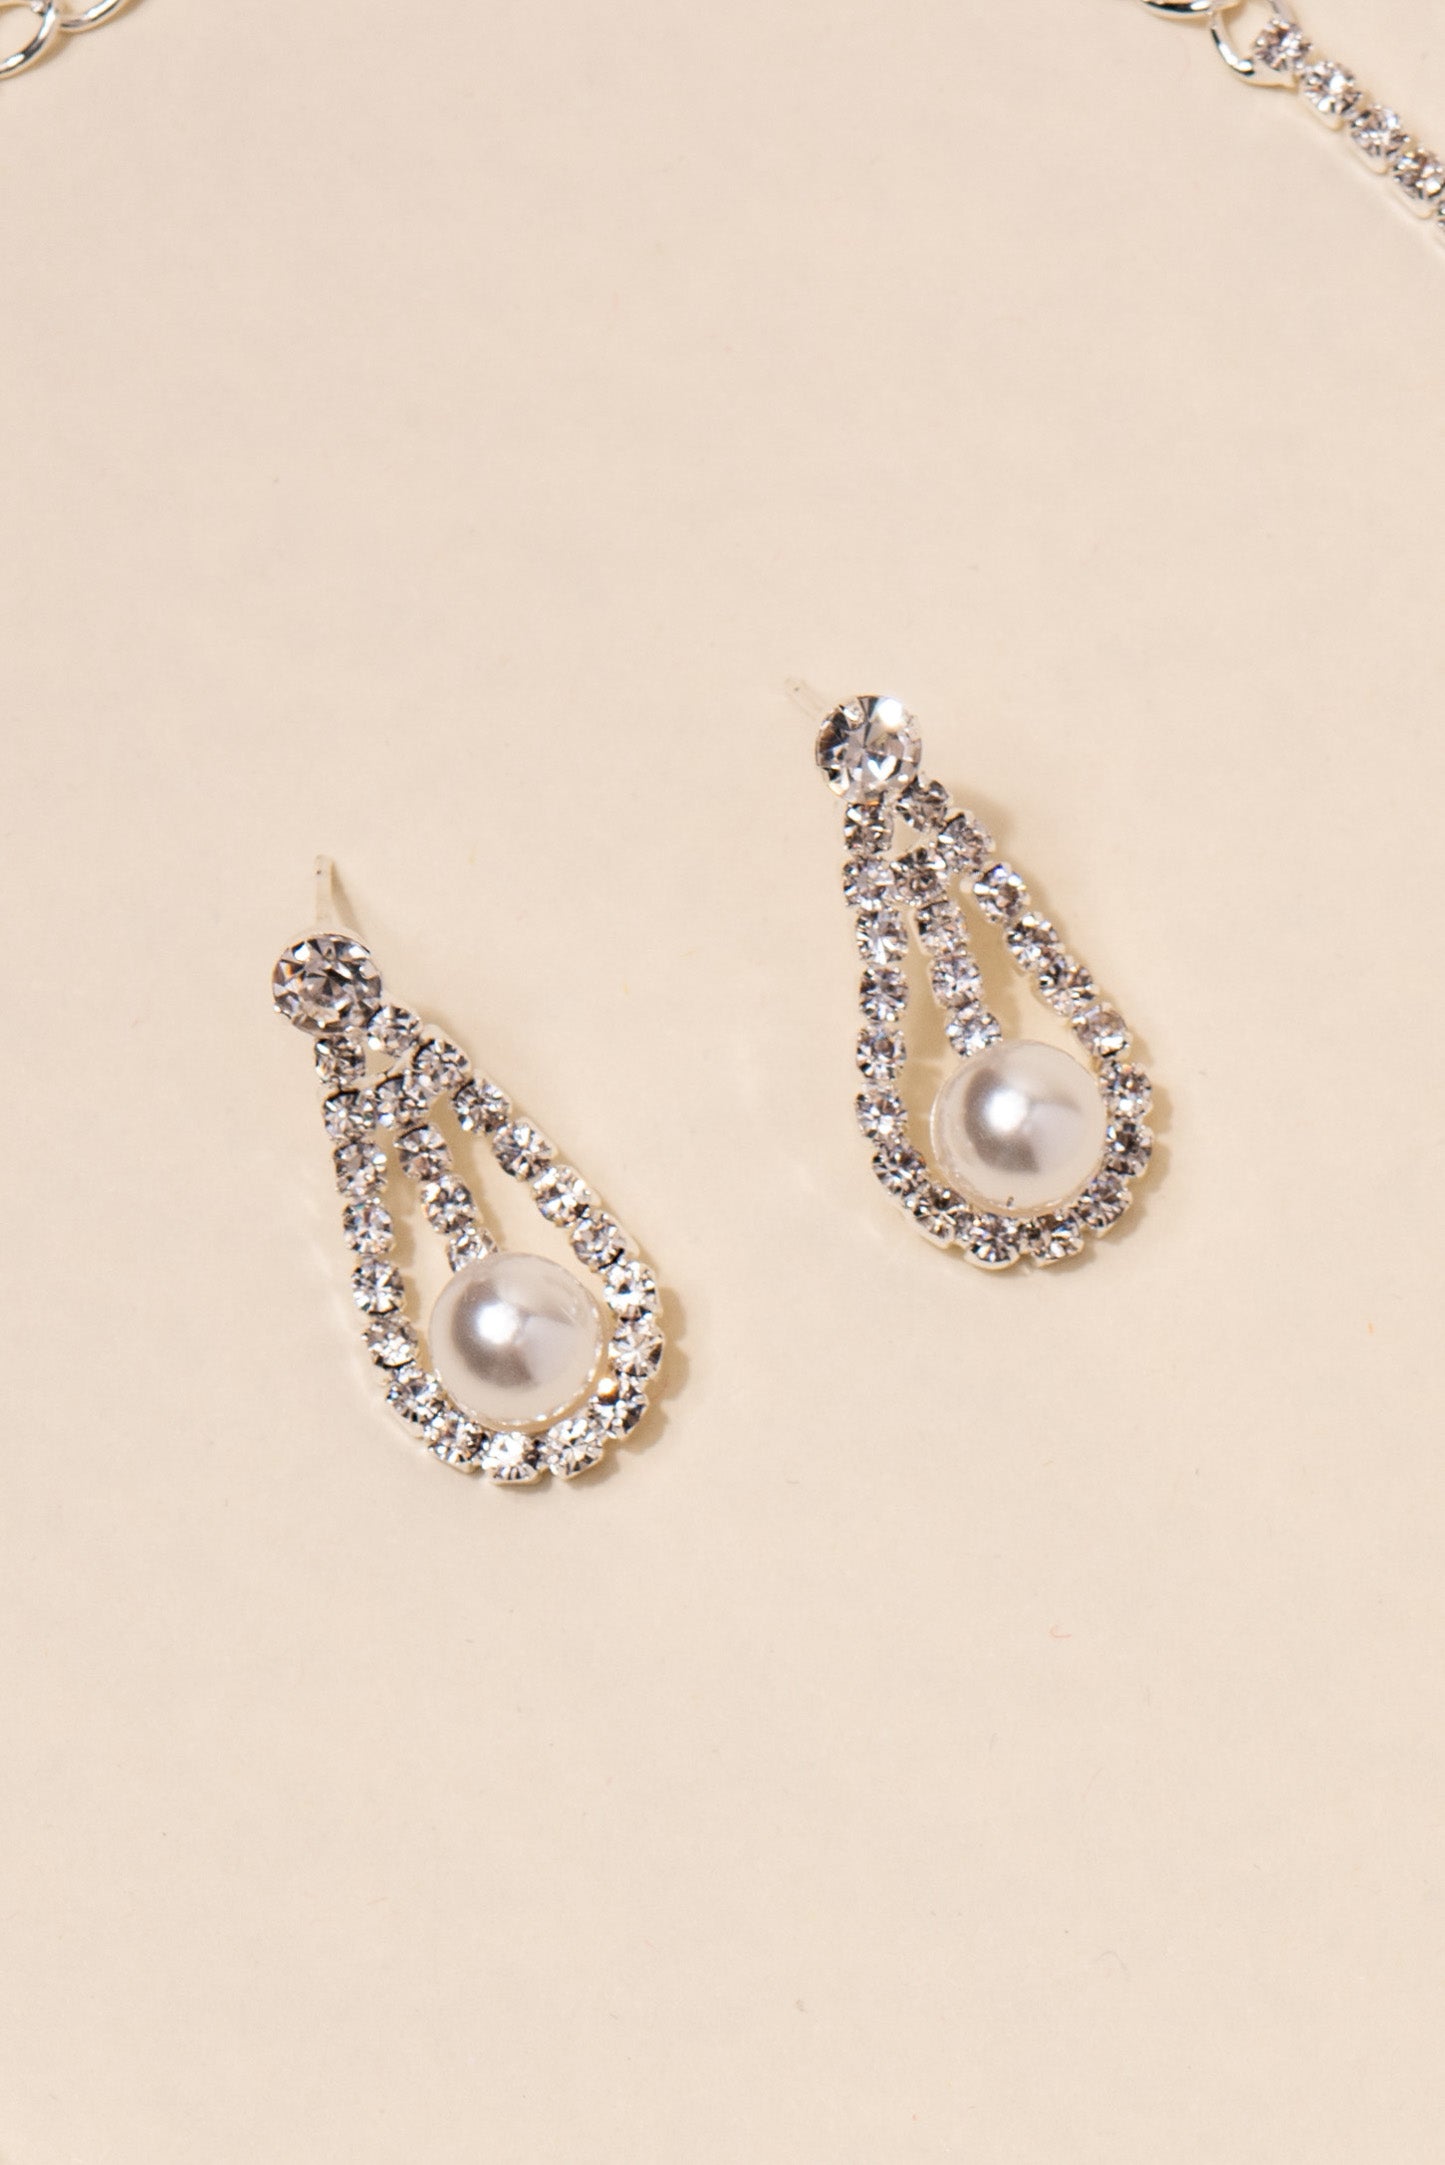 Anastasia Scalloped Rhinestone & Pearls Necklace Set